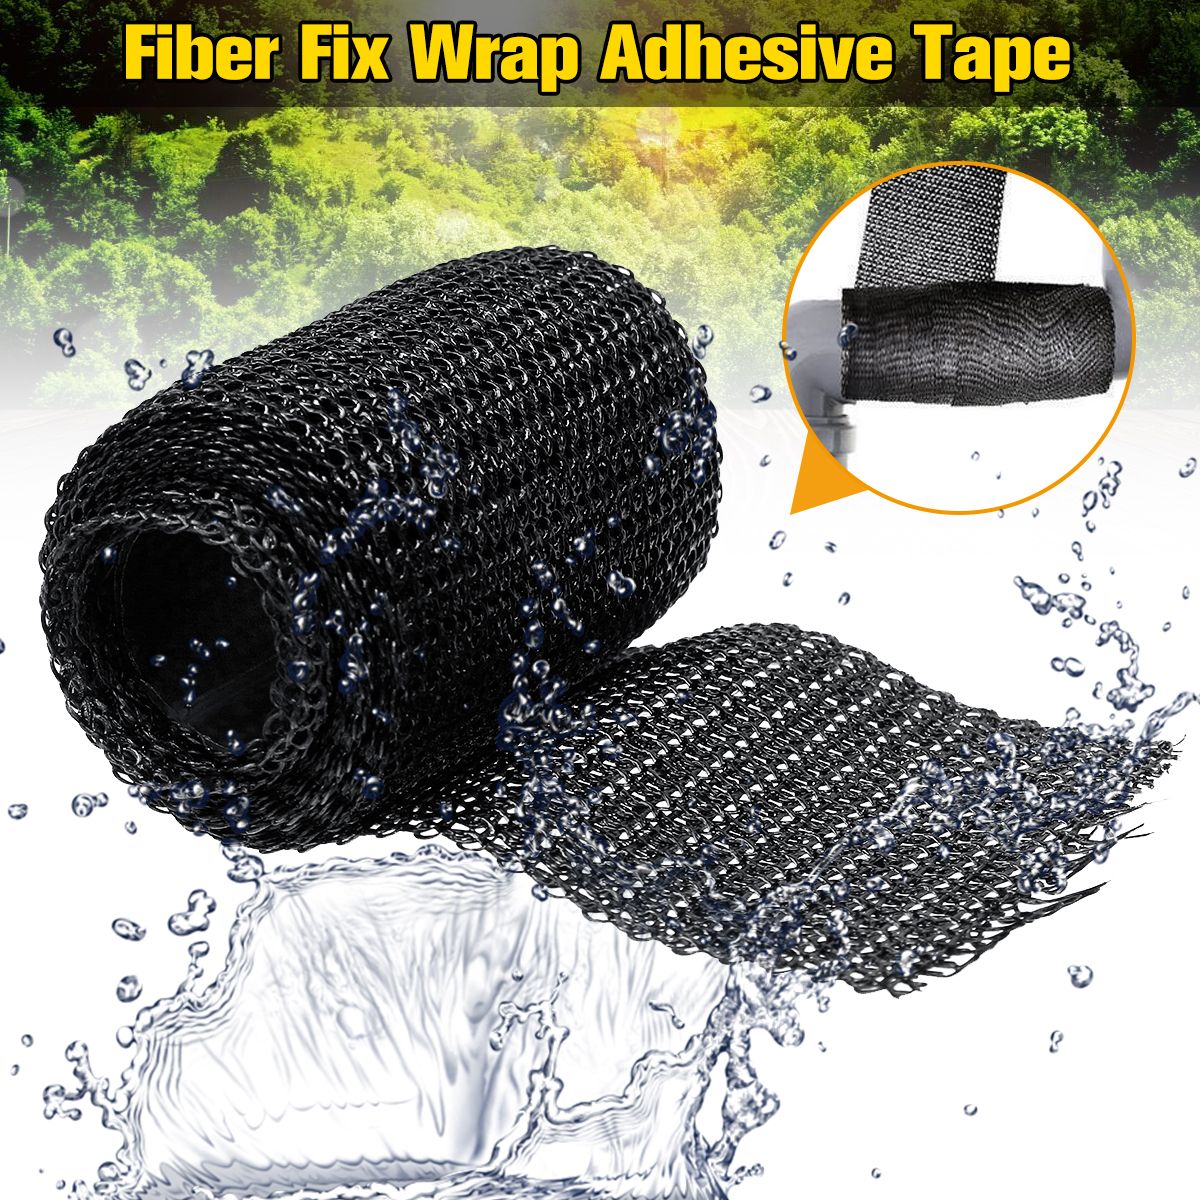 DIY-Fiber-Fix-Ridiculously-Strong-Repair-Wrap-Fiber-Fix-Super-Adhesive-Tape-1369329